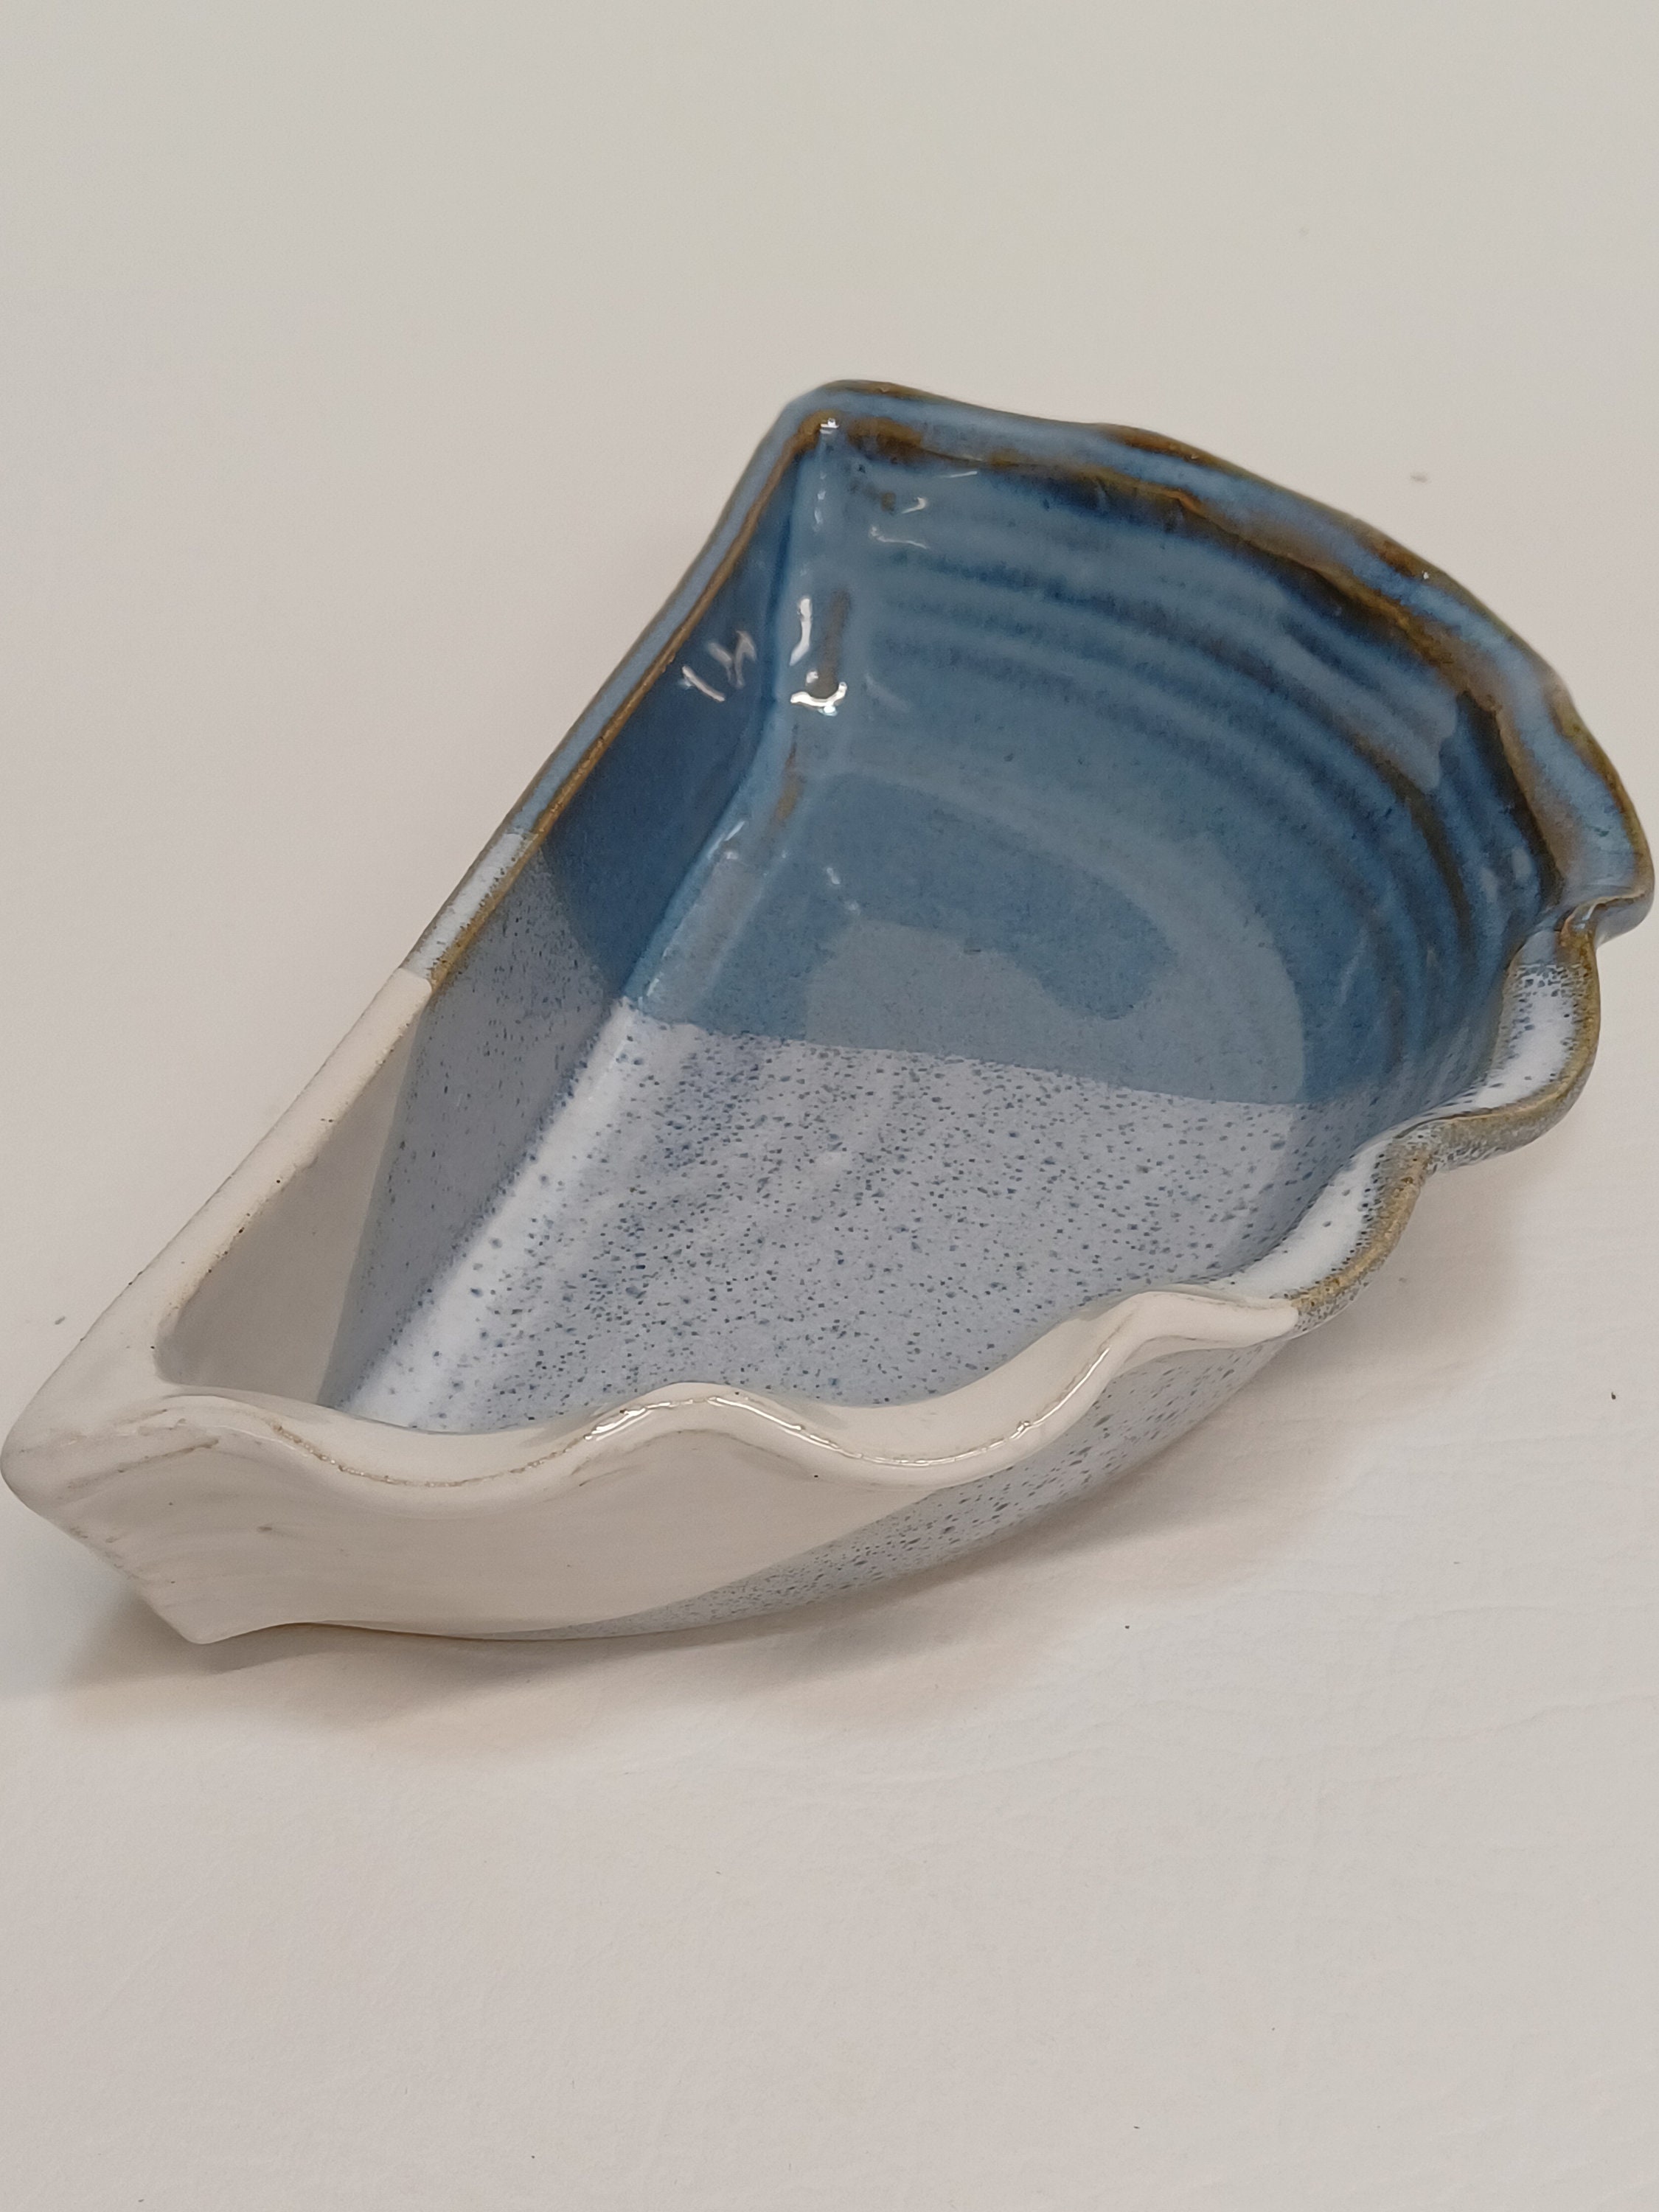 HALF PIE PLATE Handmade Stoneware in Aqua / Grey Glazed